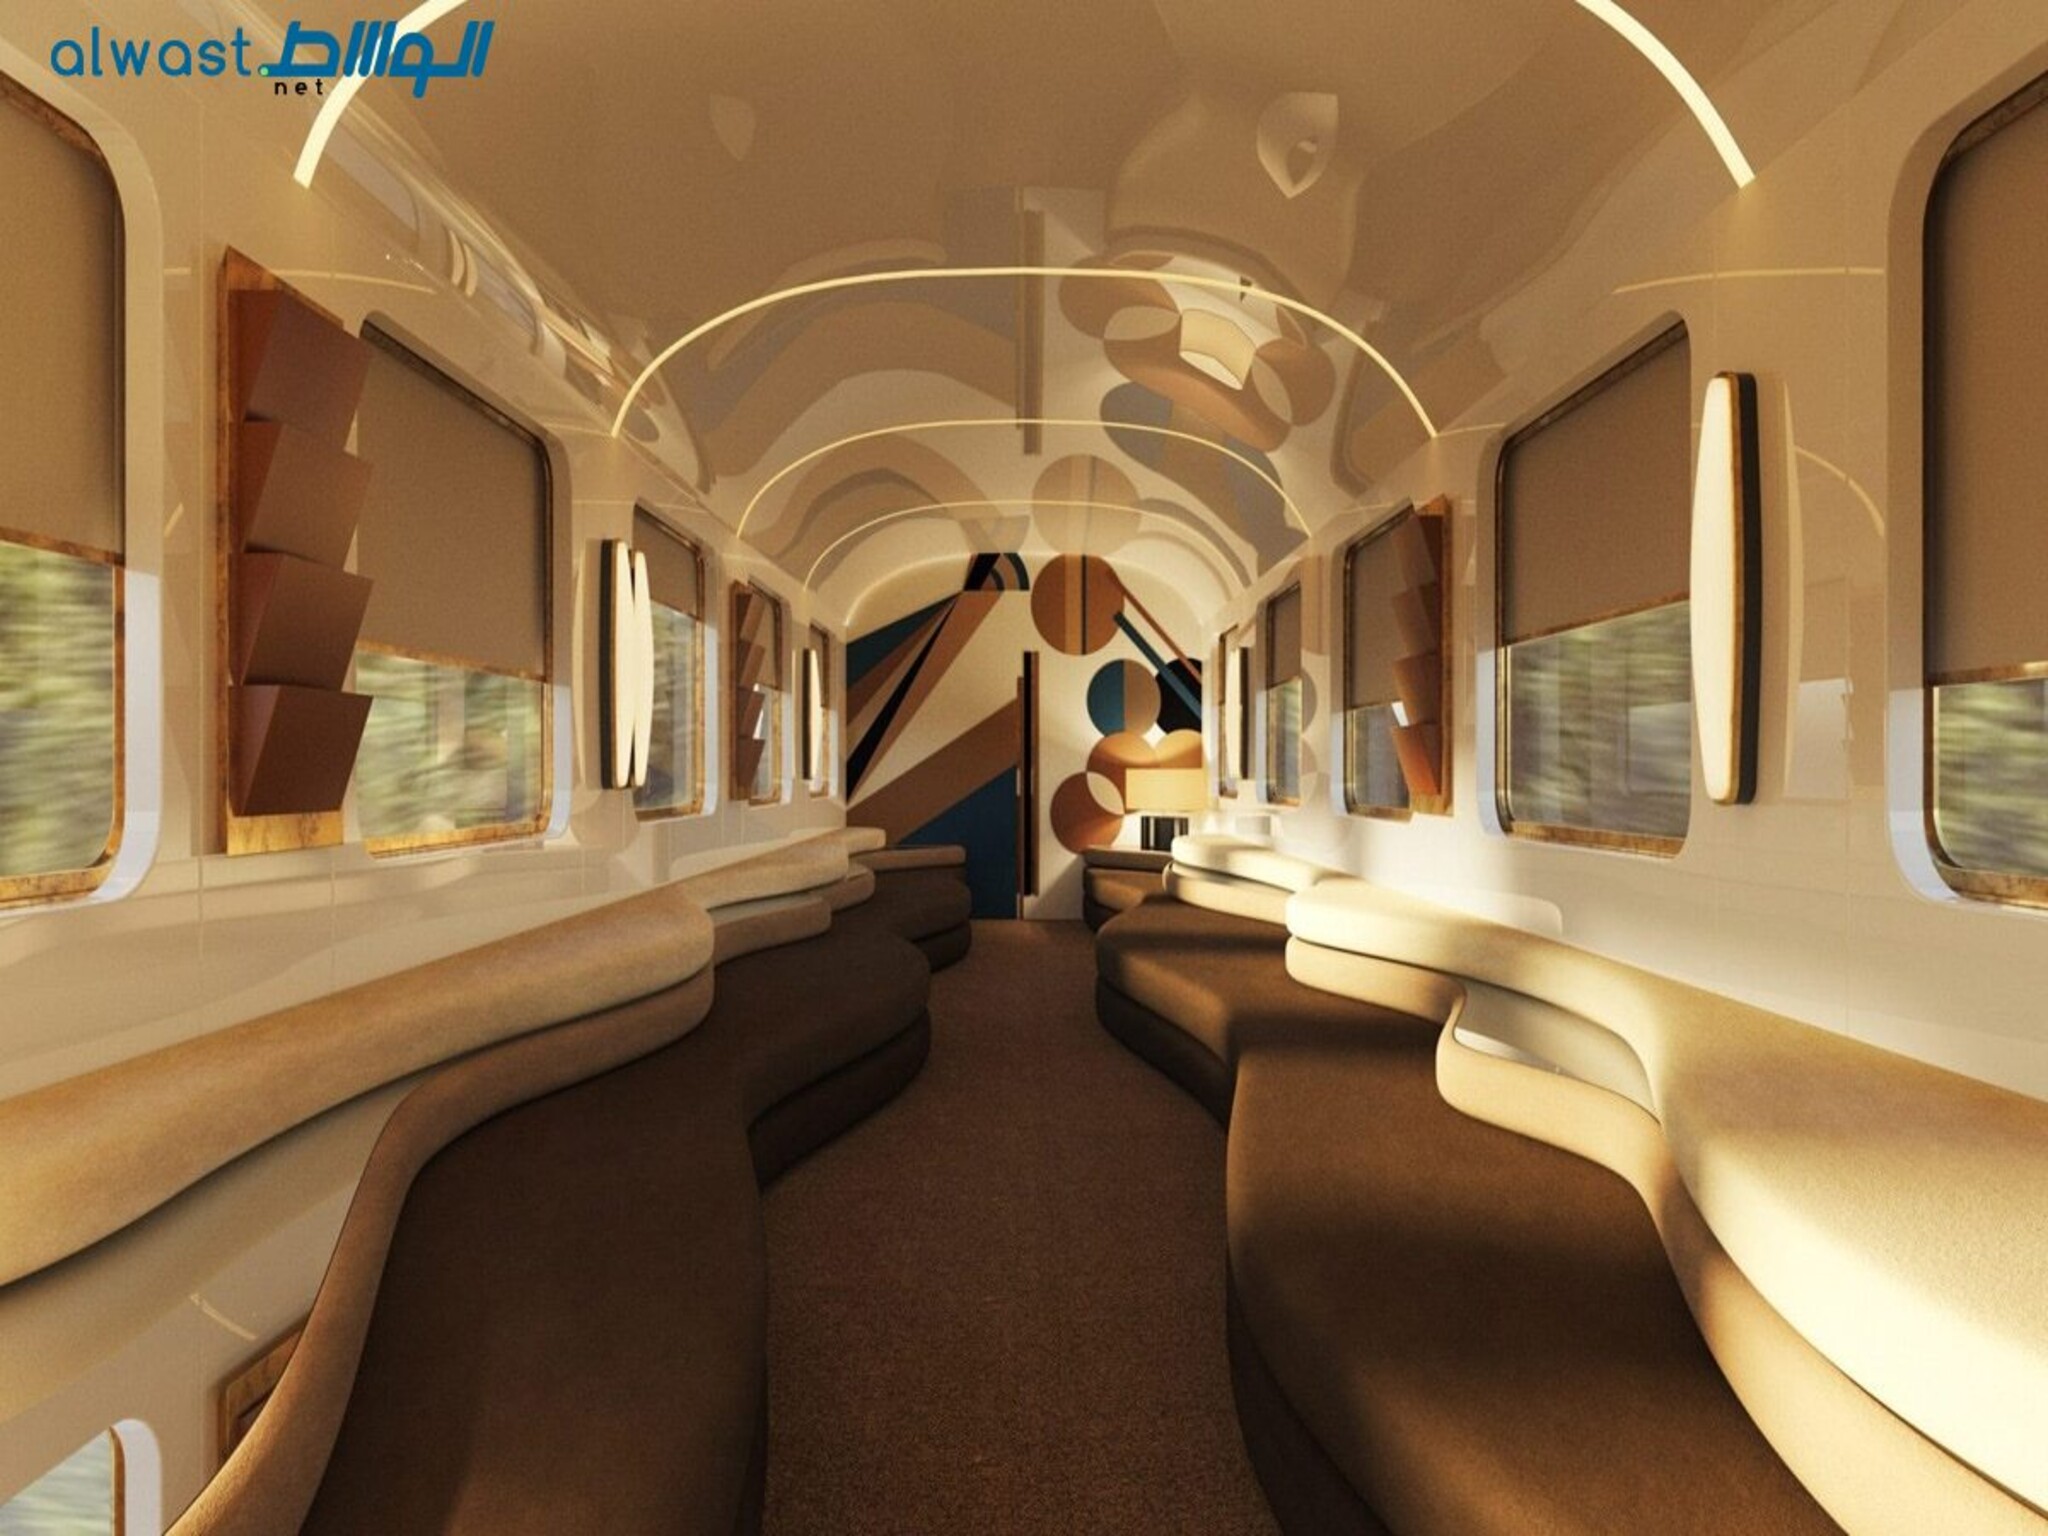 Saudi Arabia luxury train "Desert Dream" set to launch in late 2025